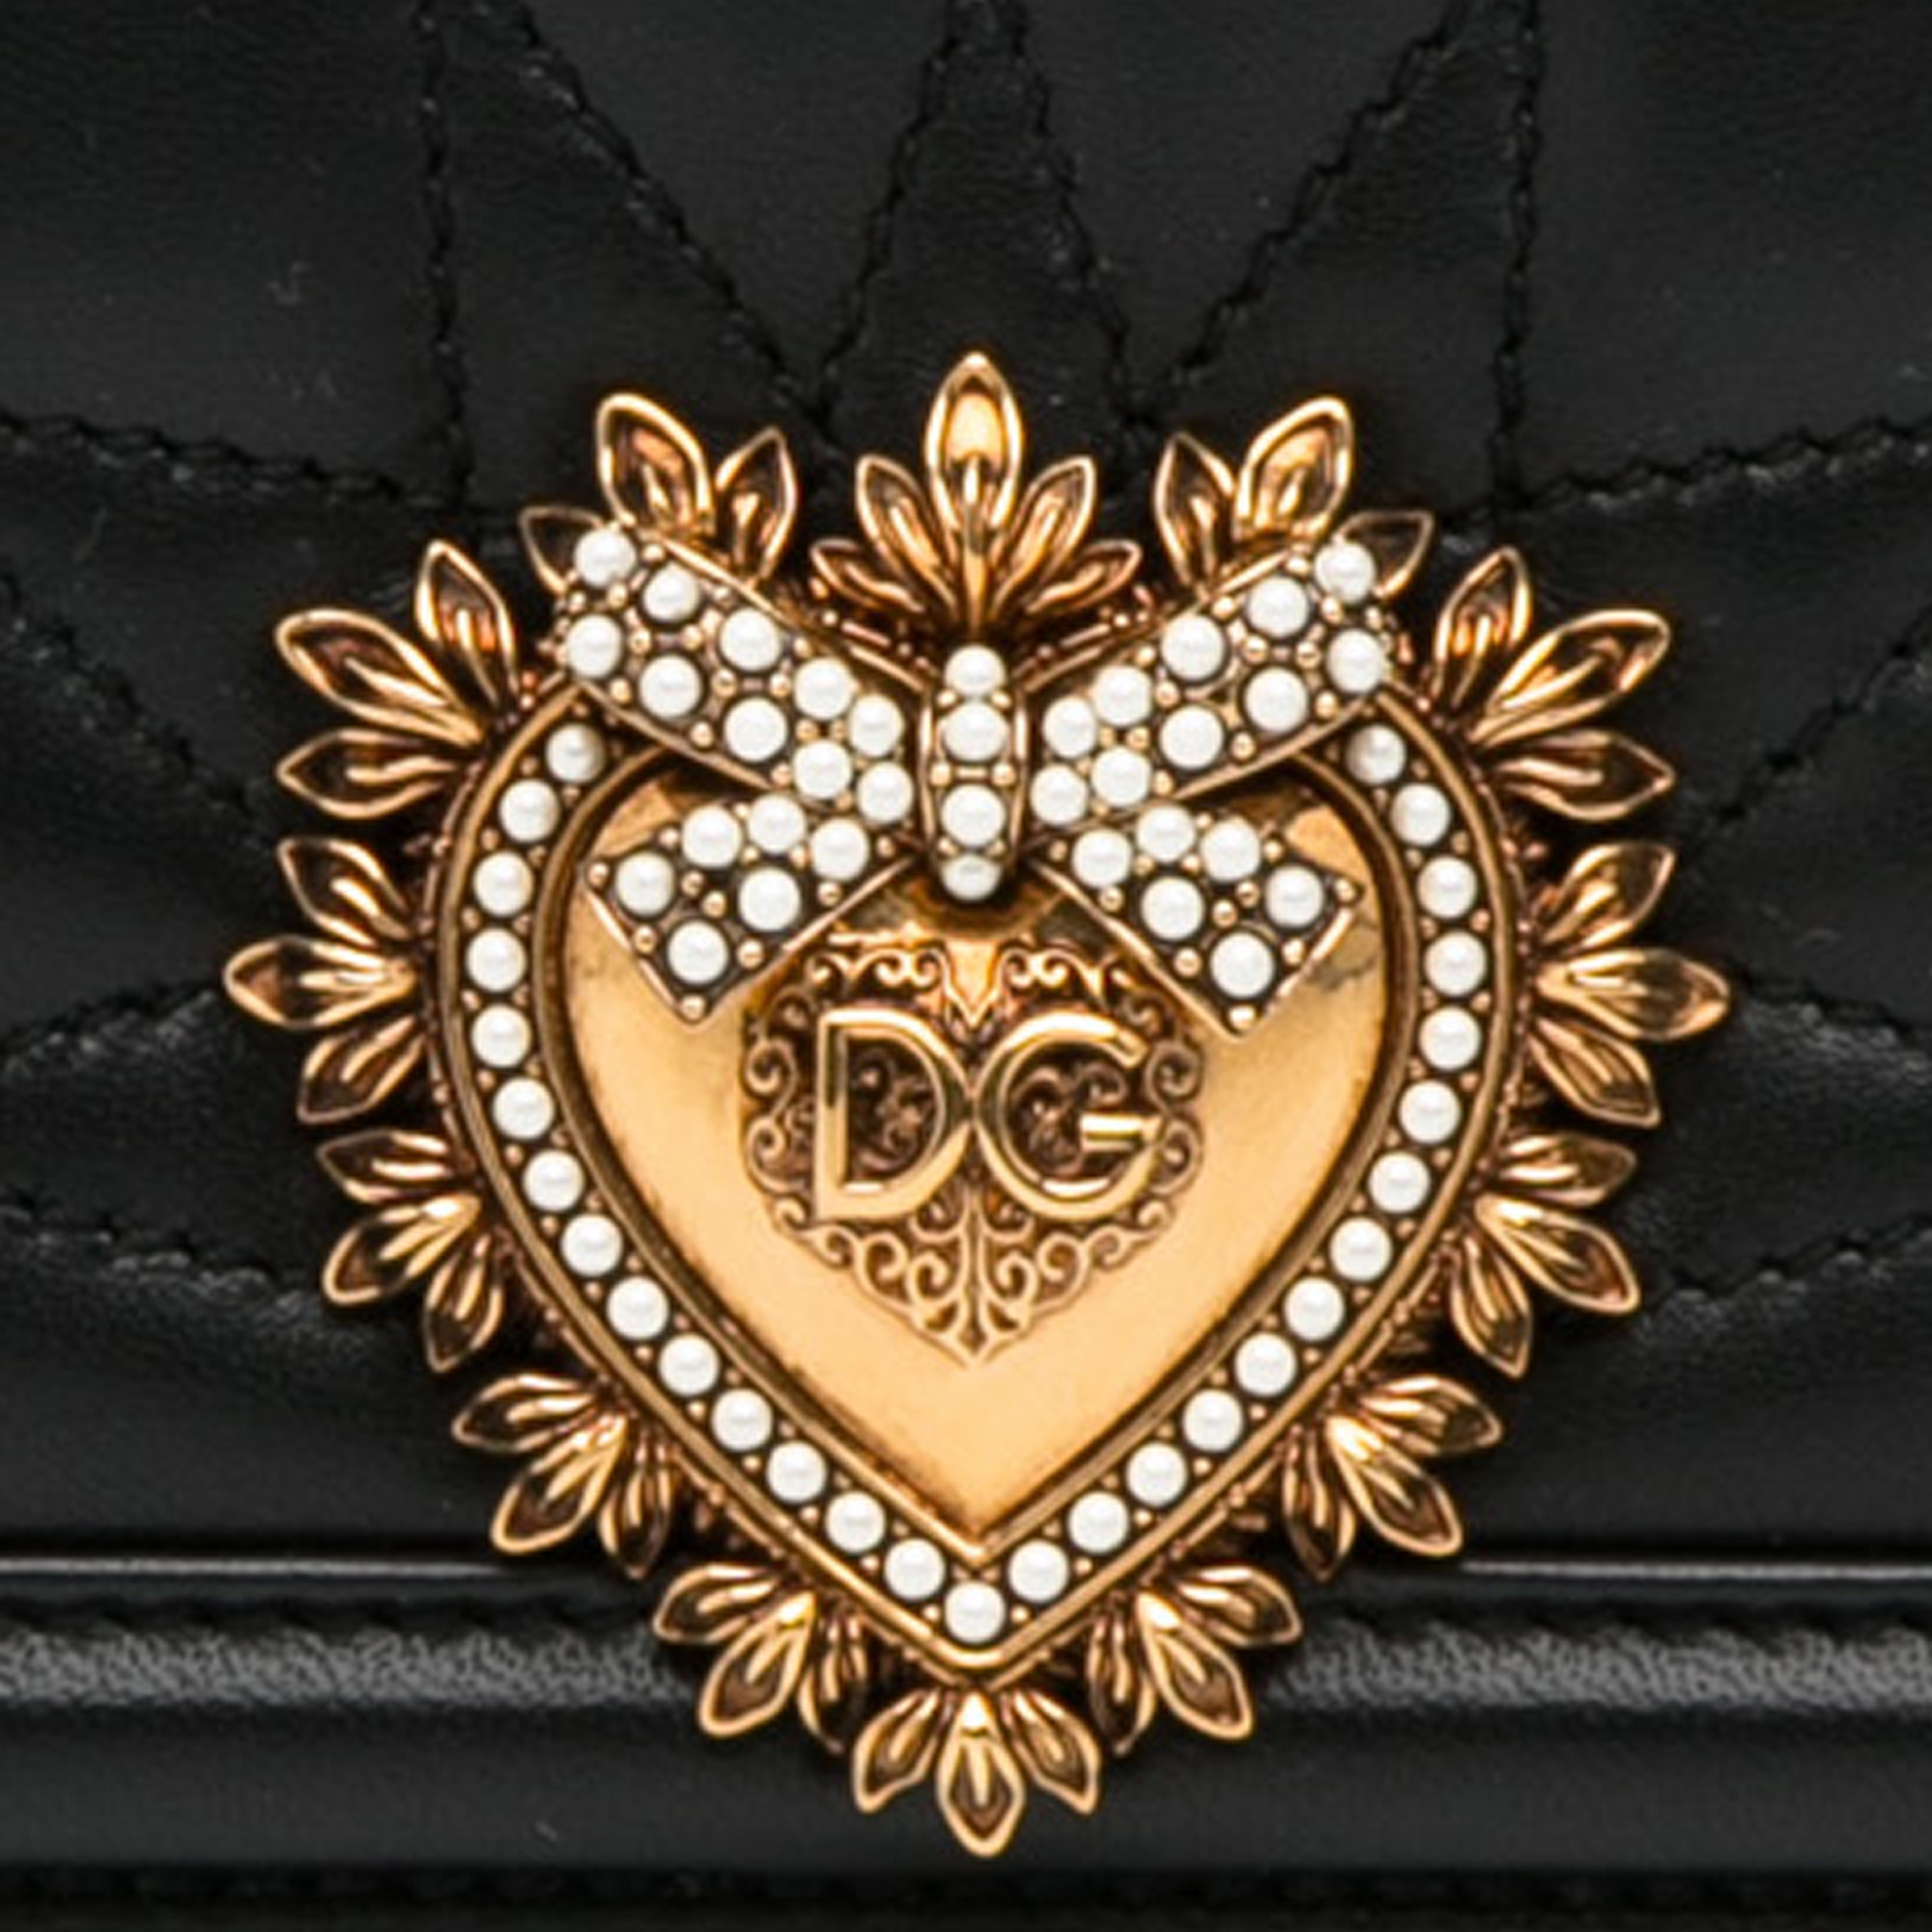 Dolce & Gabbana Black Small Devotion Crossbody Bag